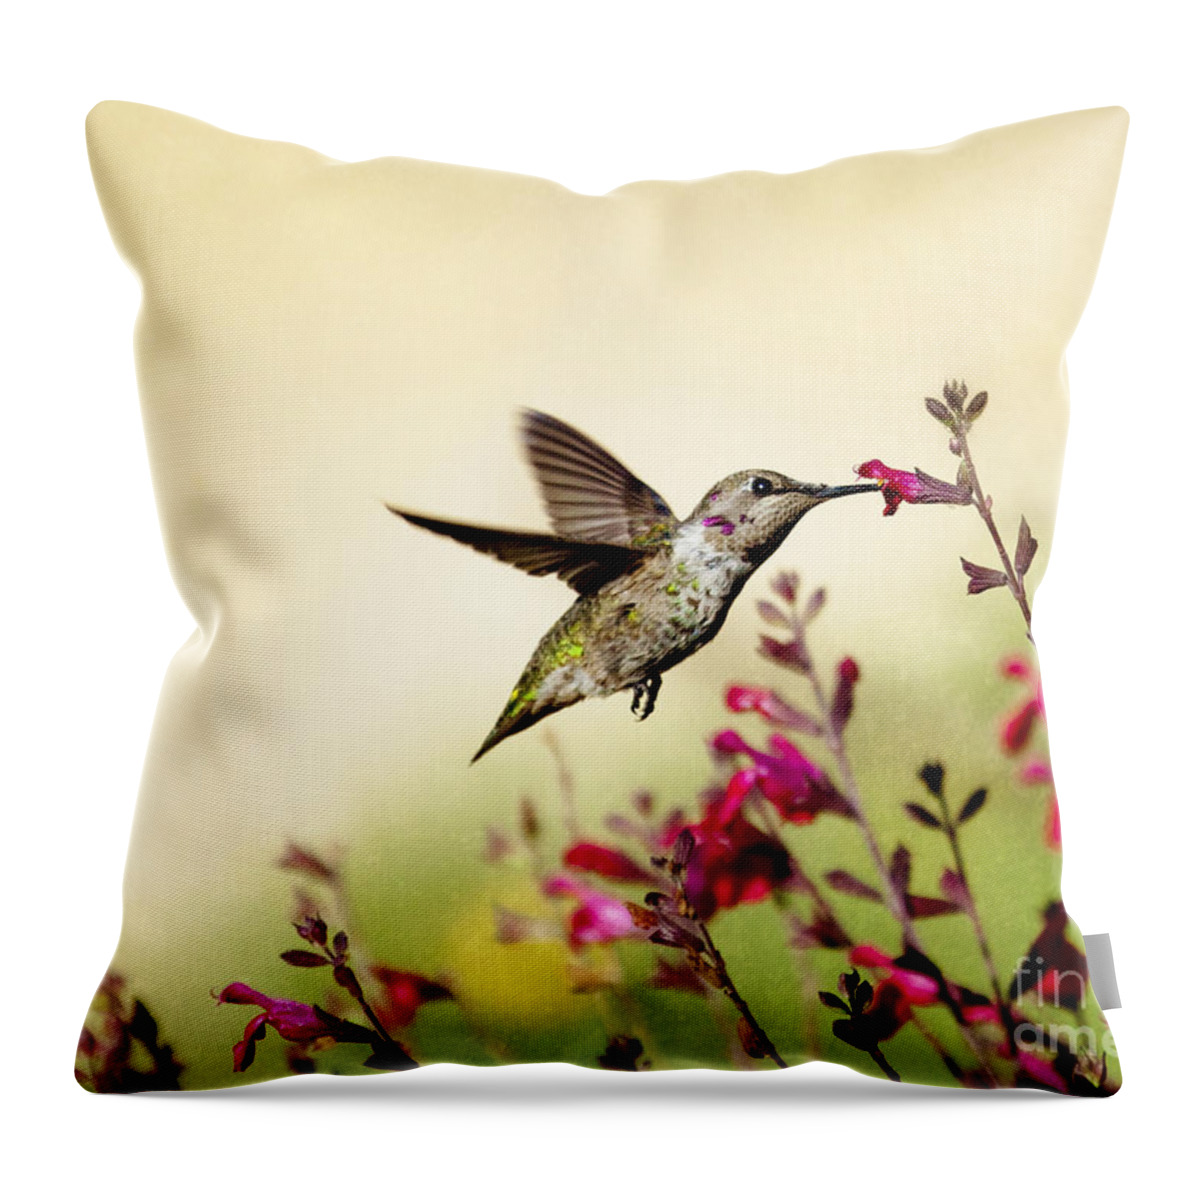 Humming Bird Throw Pillow featuring the photograph The Tempest Hummingbird by Susan Gary